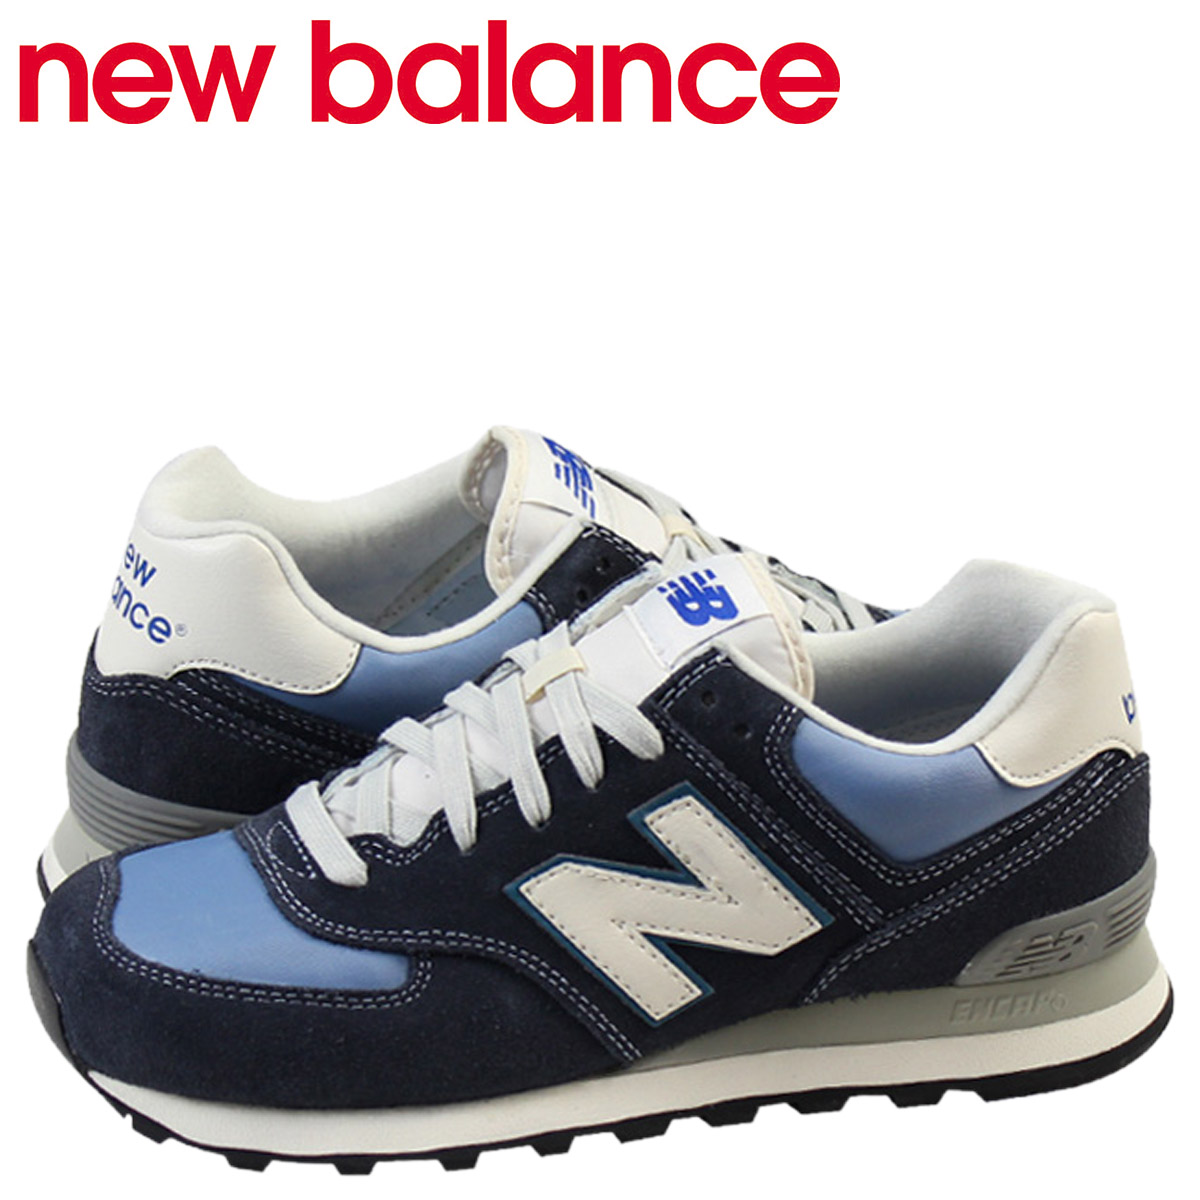 new balance 574 blue on feet